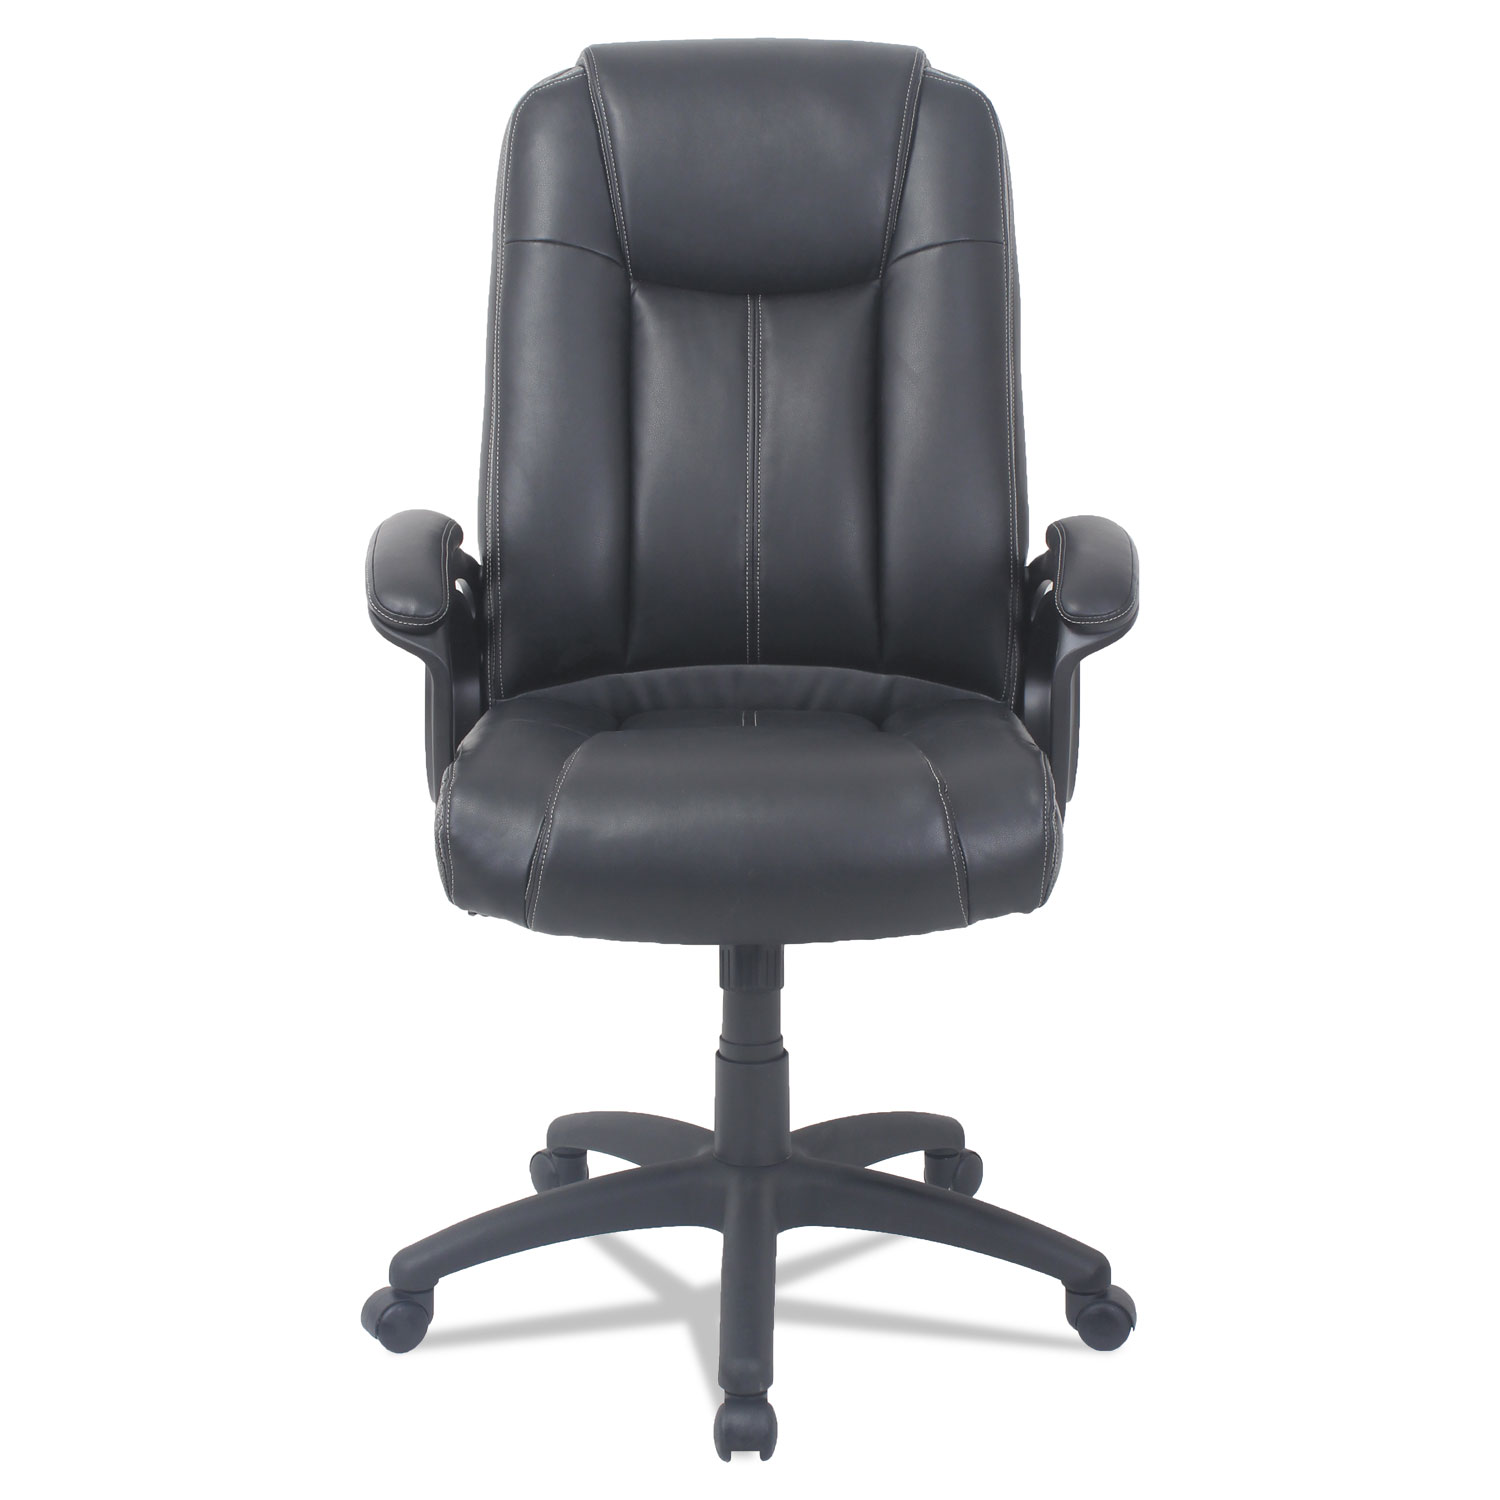 Alera CC Series Executive High-Back Leather Chair, Black